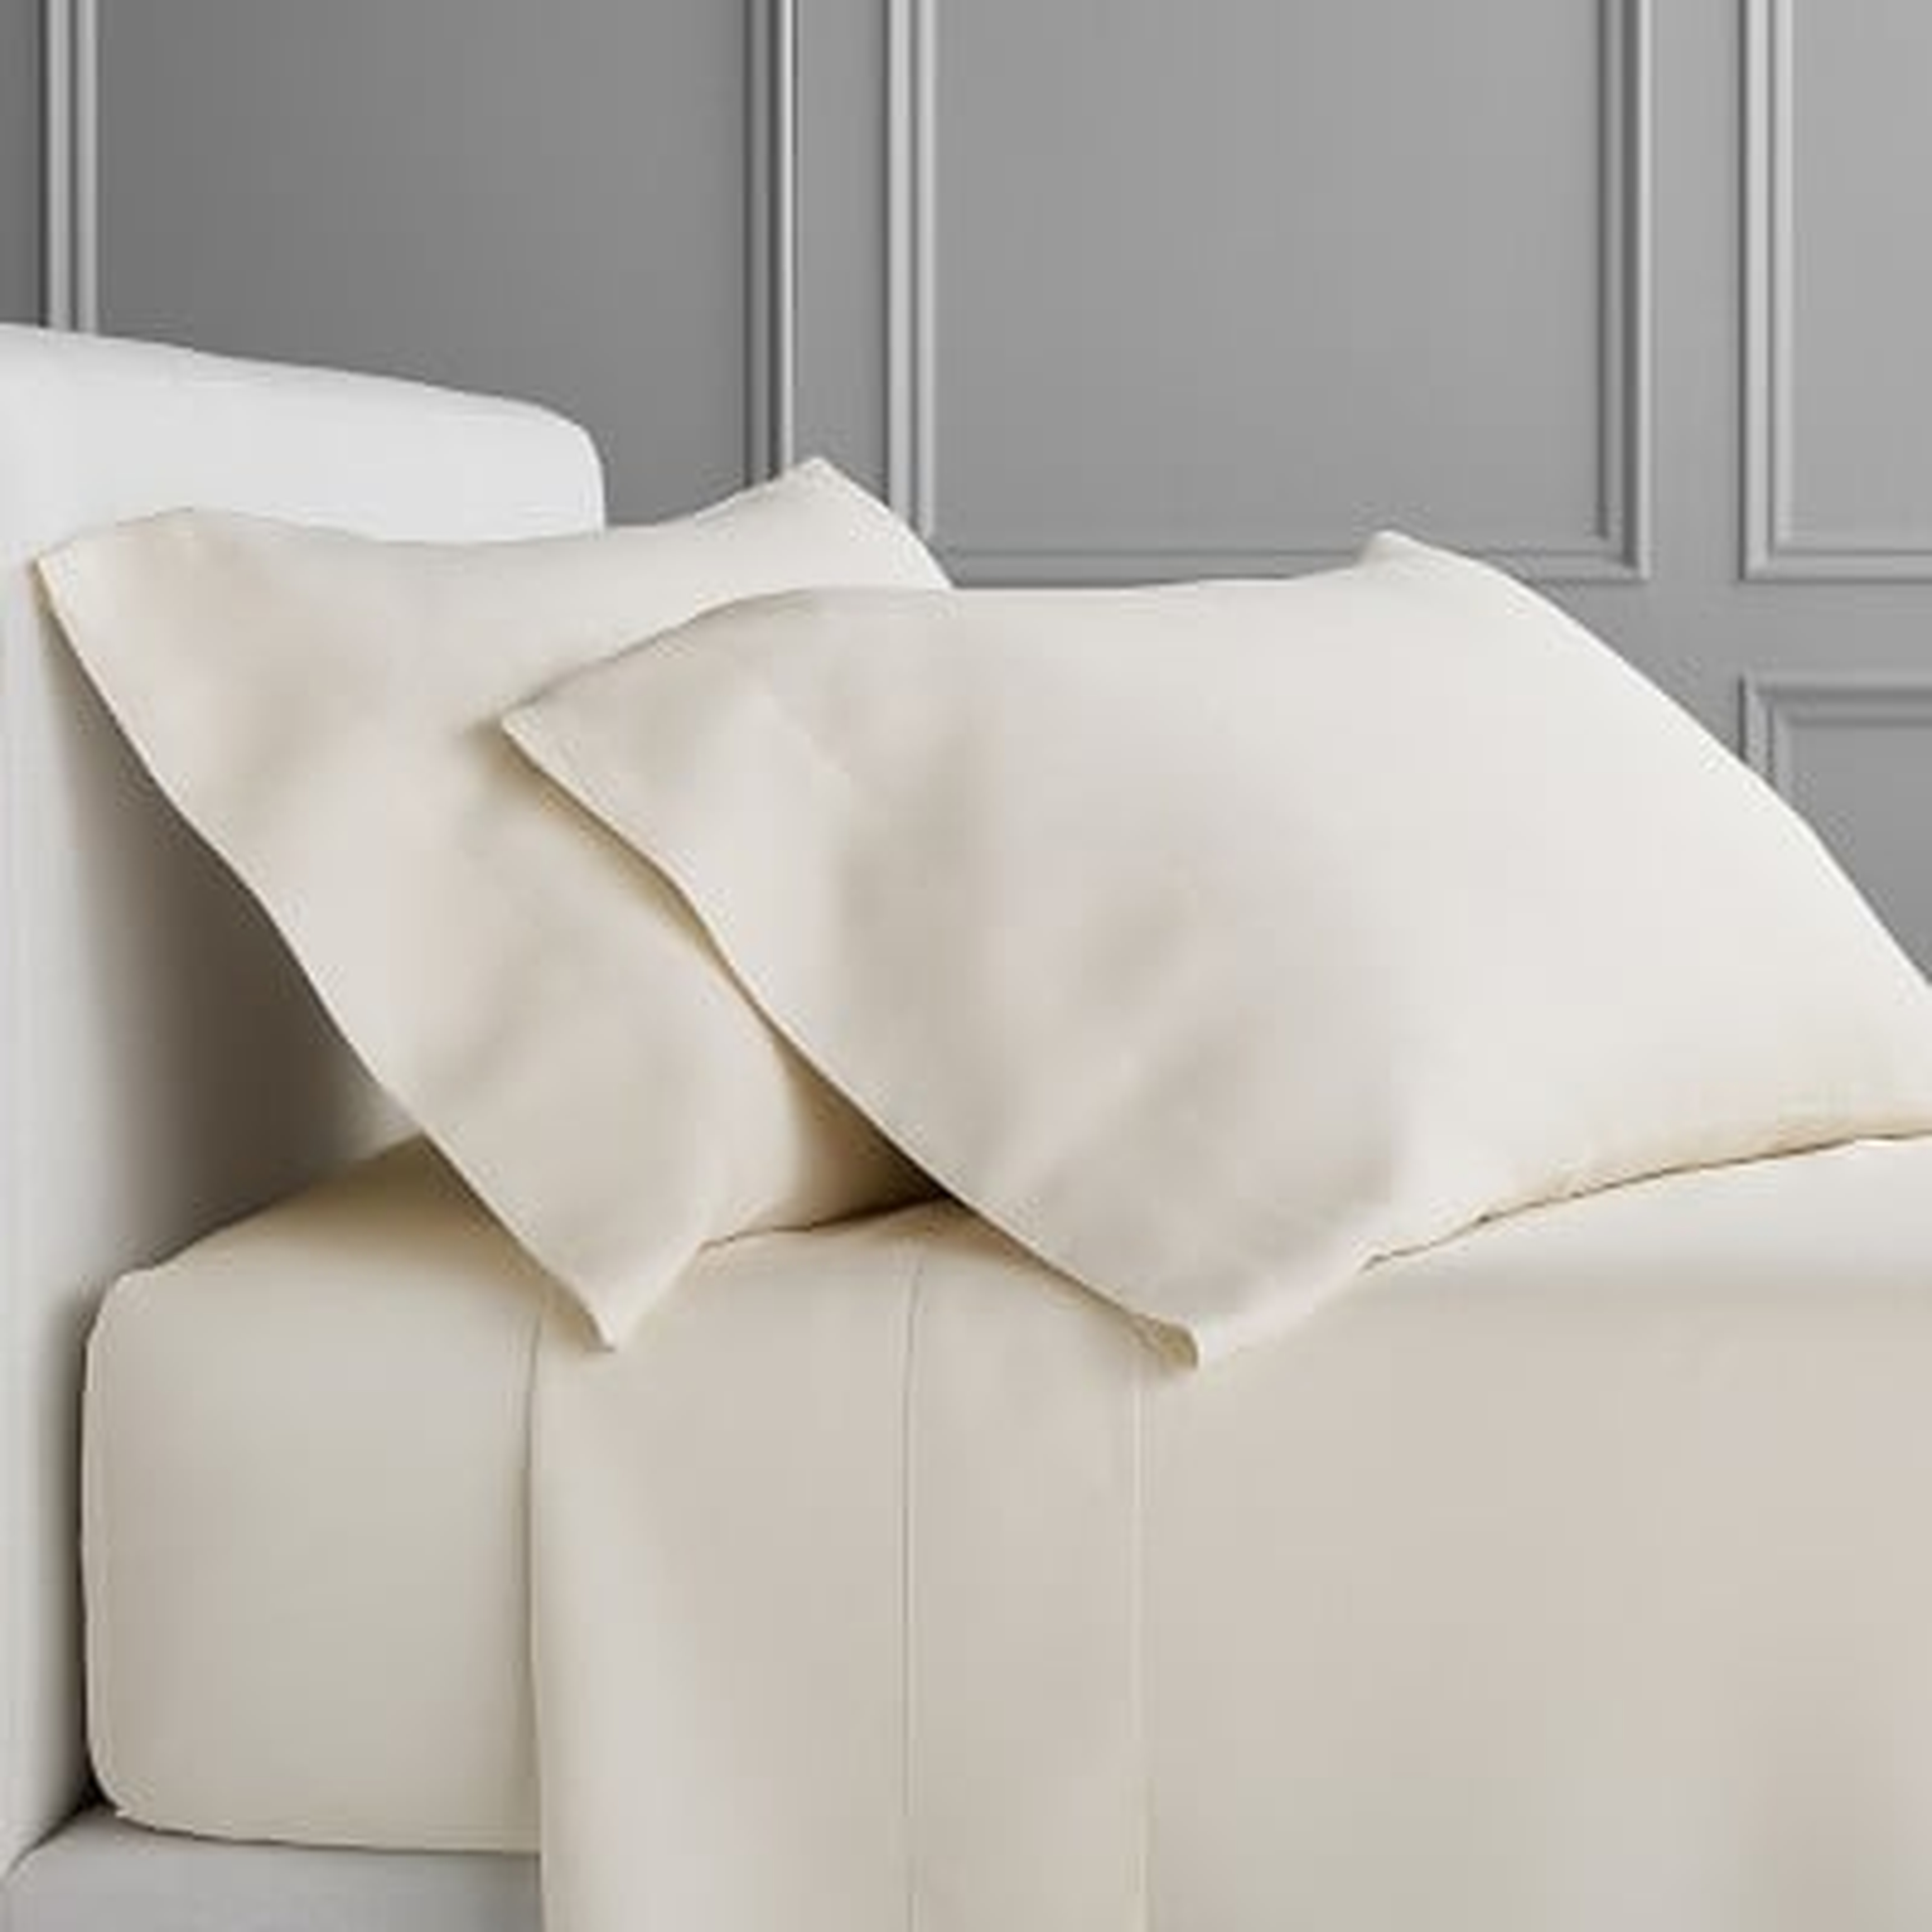 Signature Linen Bedding, Sheet Set, Queen, Ivory - Williams Sonoma